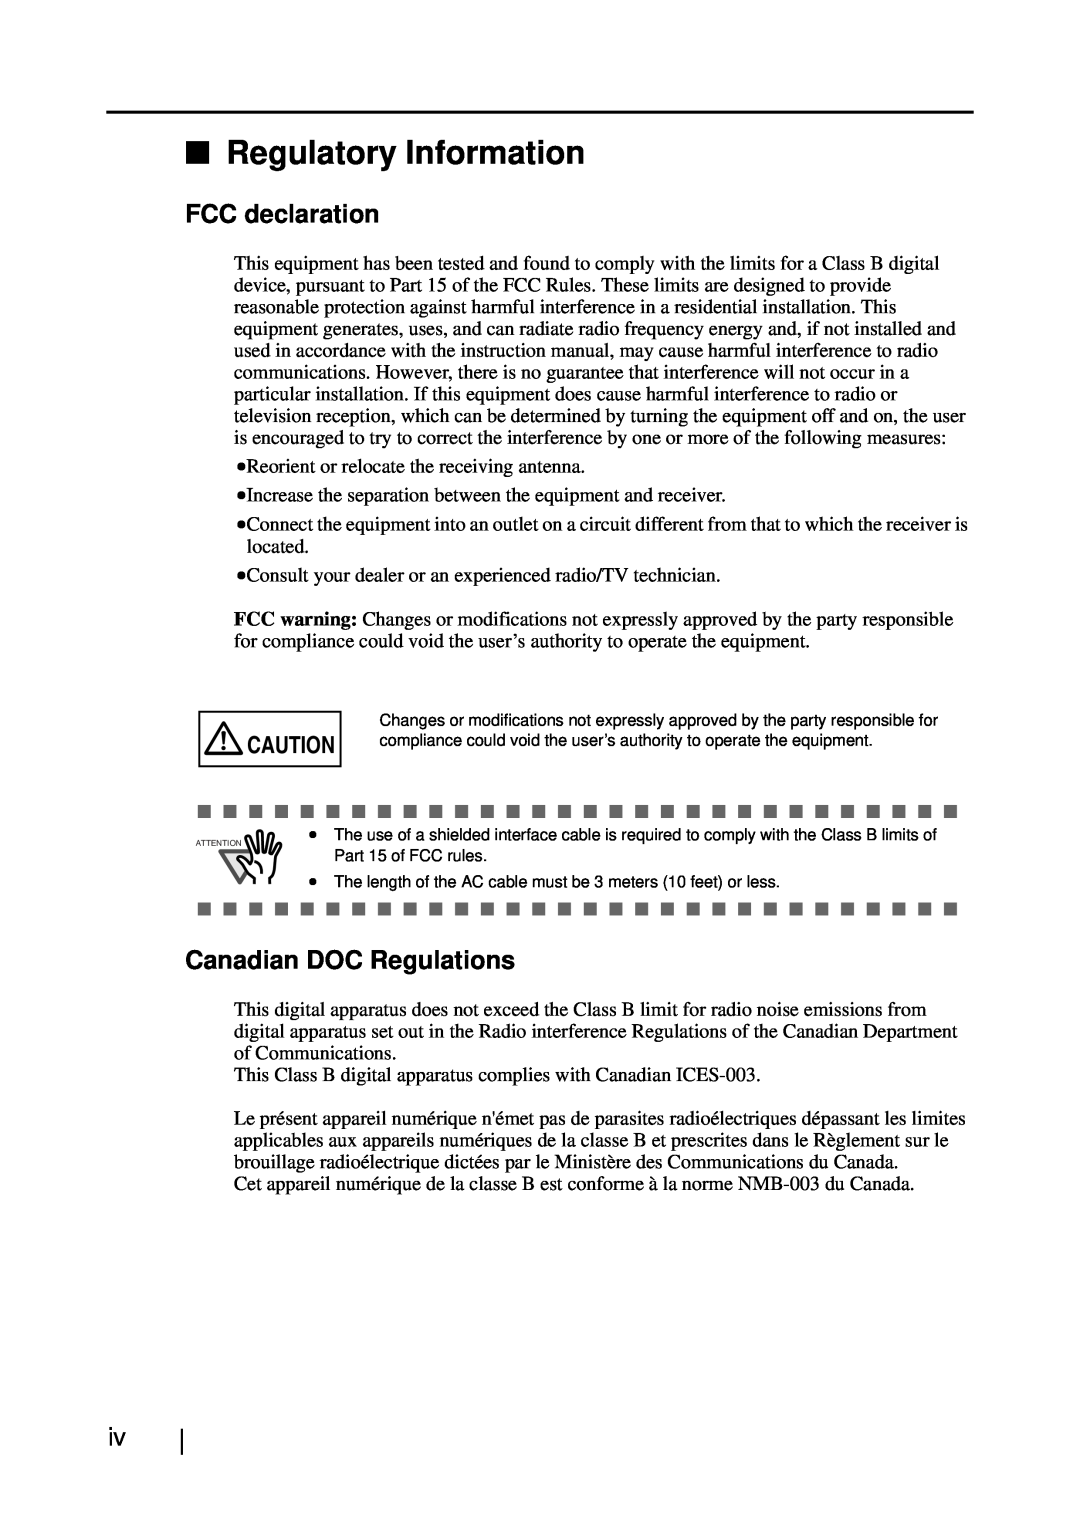 Fujitsu S510M manual Regulatory Information, FCC declaration, Canadian DOC Regulations 